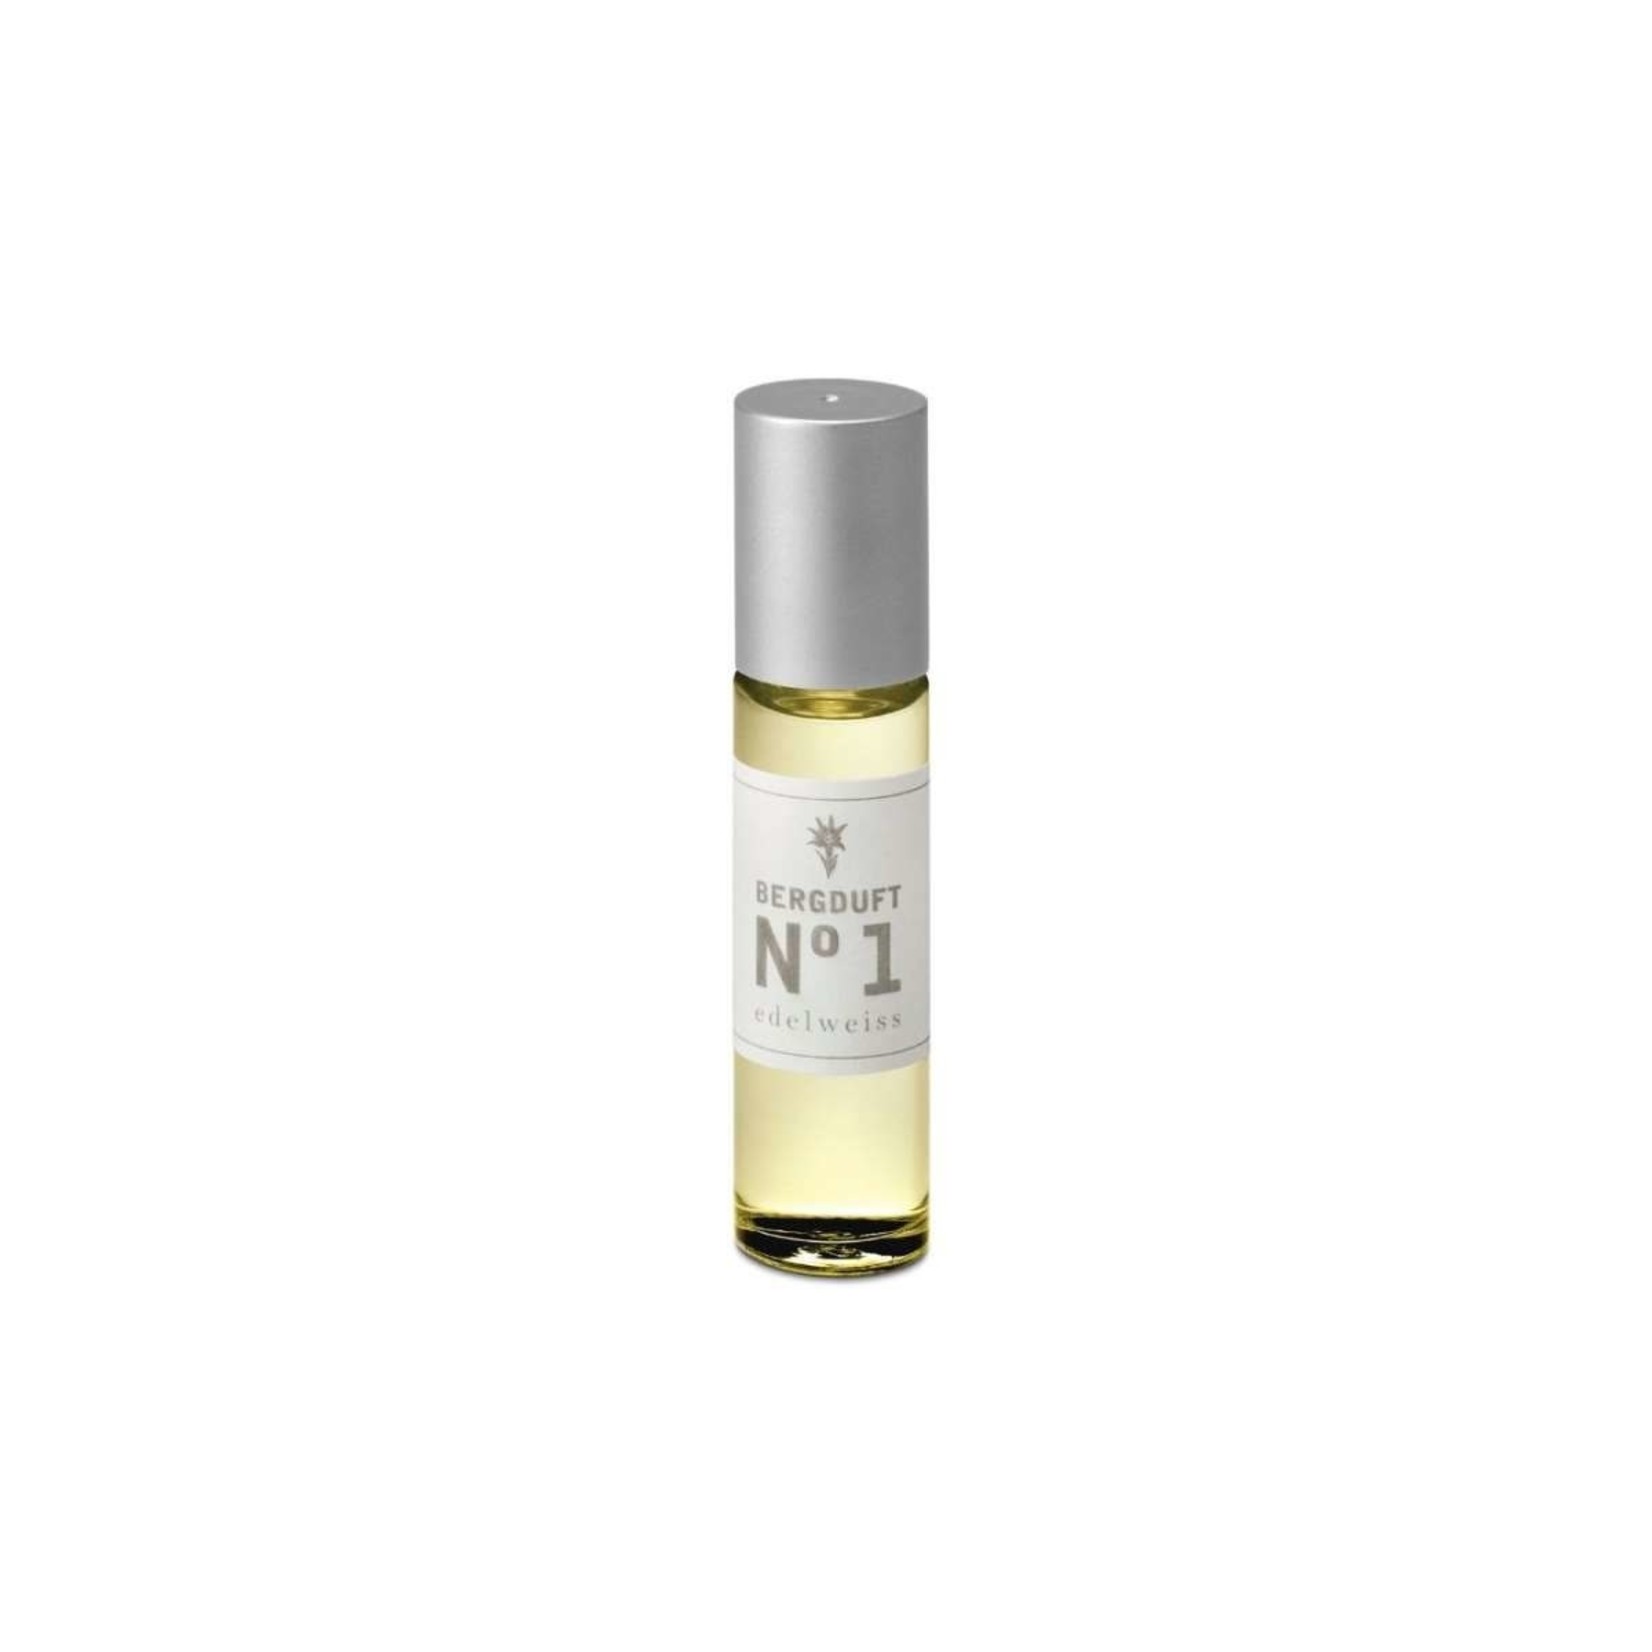 Berg & Kraft Bergduft Eau de Parfum Rollon N° 1 Edelweisstoff